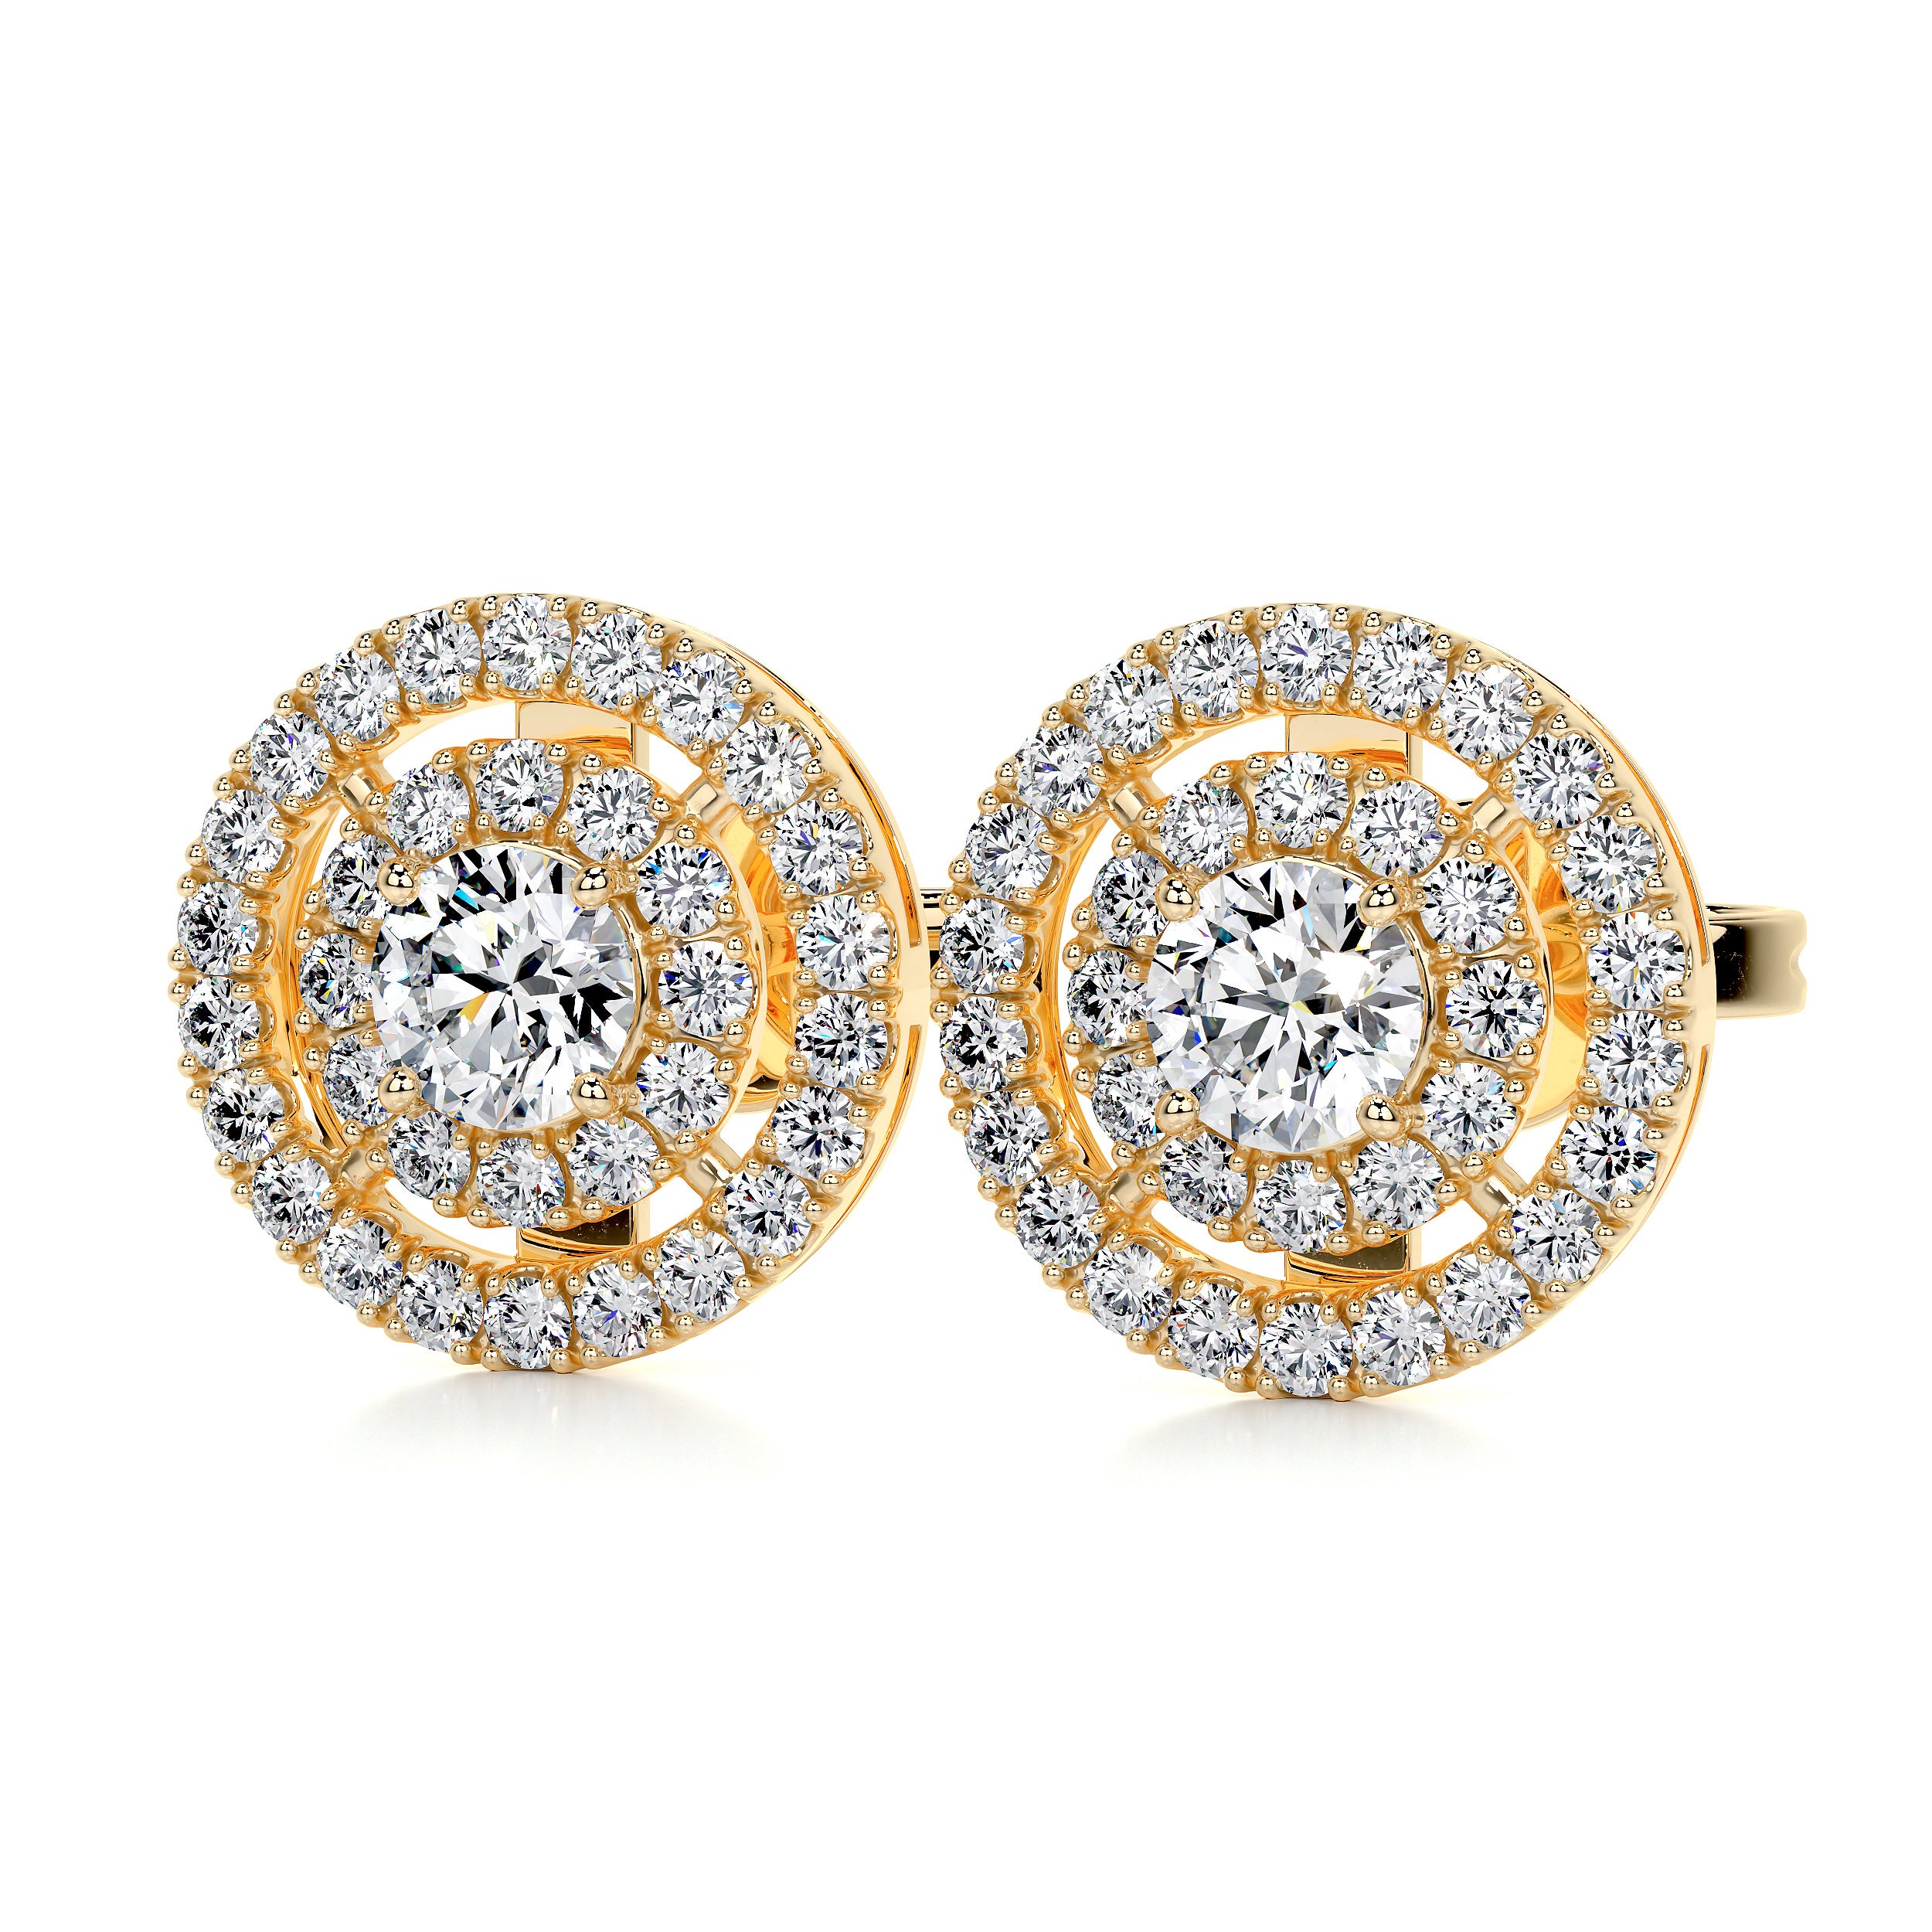 Joan Diamond Earrings   (1 Carat) - 18K Yellow Gold